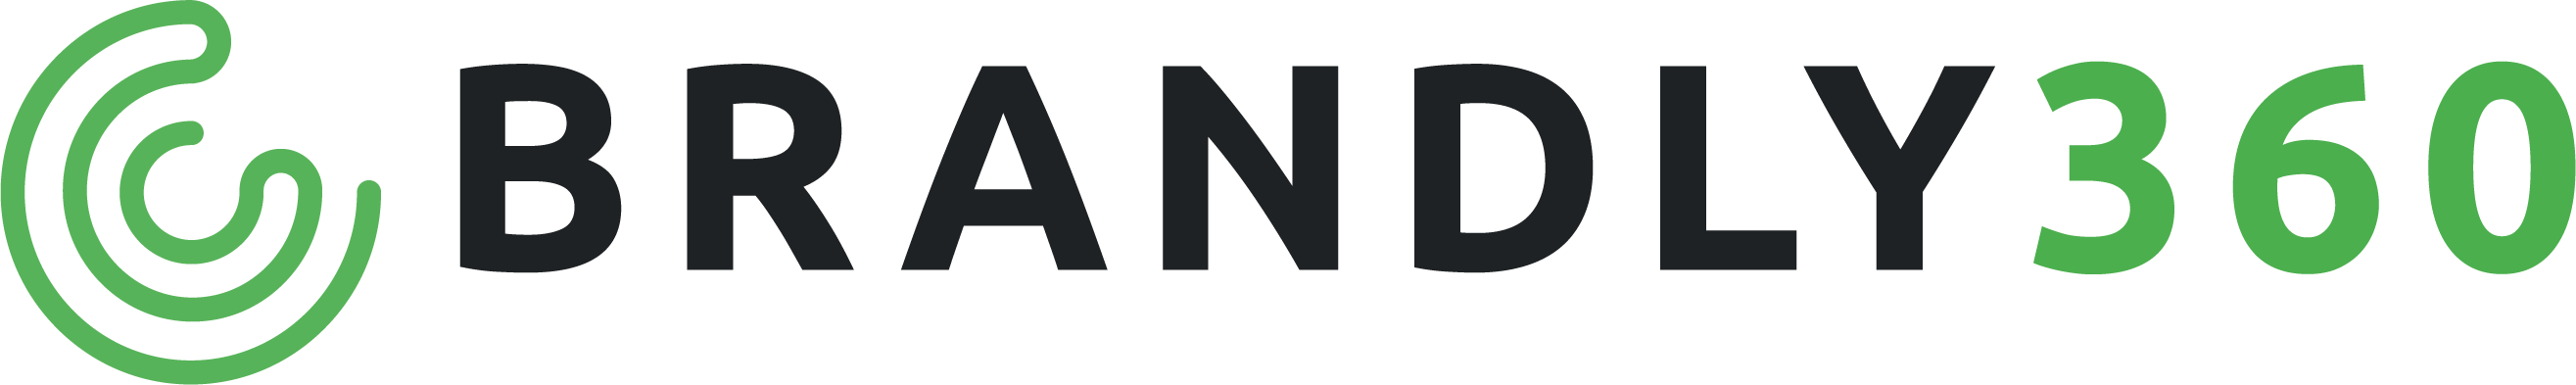 Brandly360 logo